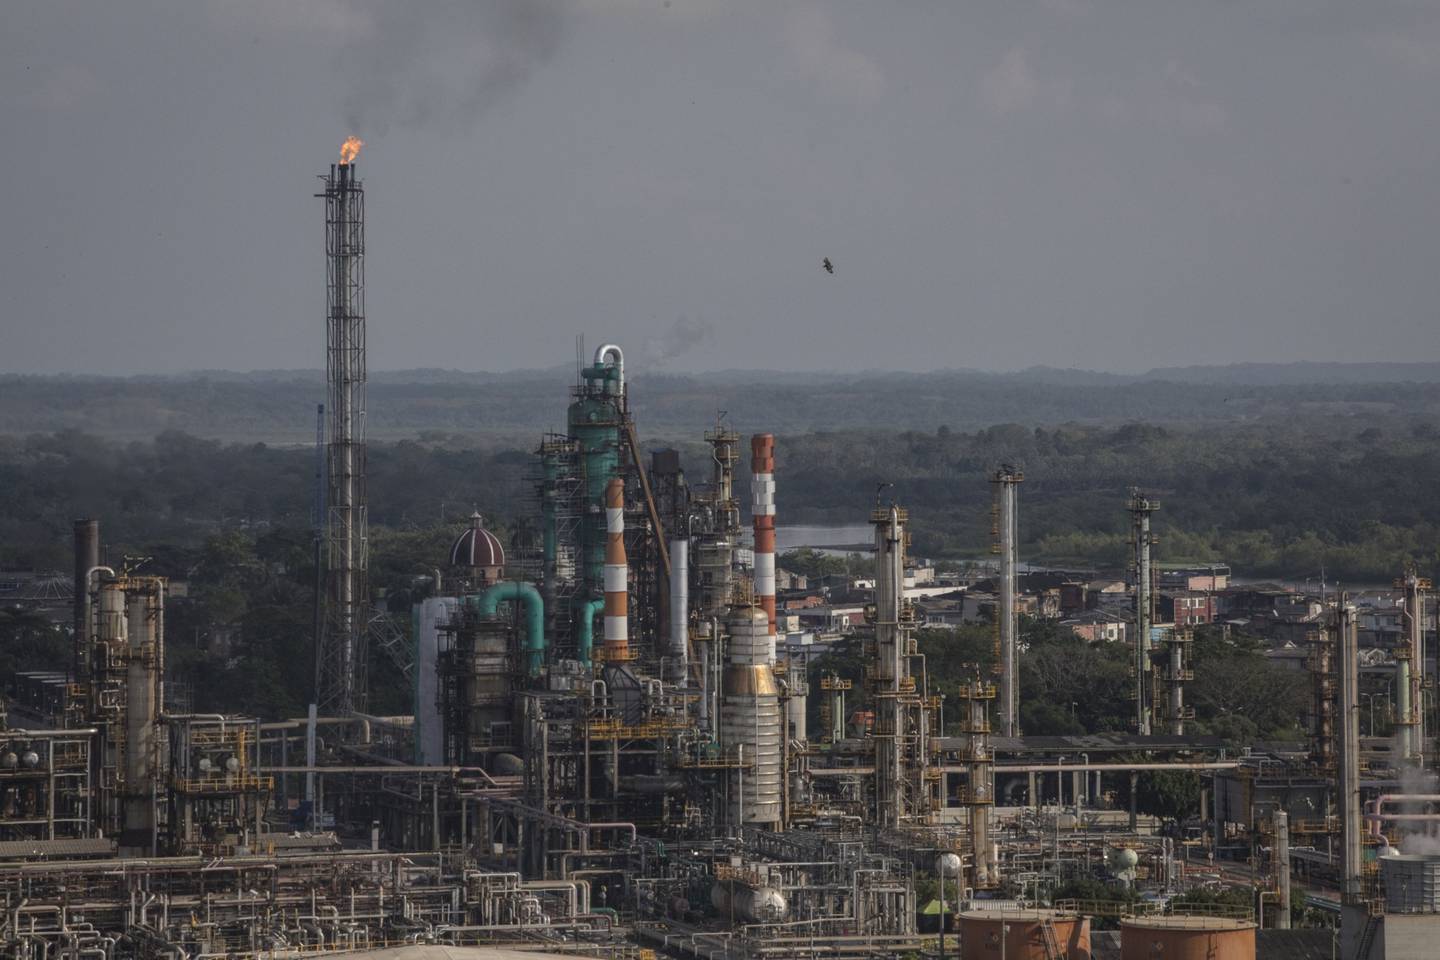 La refinería de Ecopetrol Barrancabermeja en Barrancabermeja, Colombia, el martes 15 de febrero de 2022.